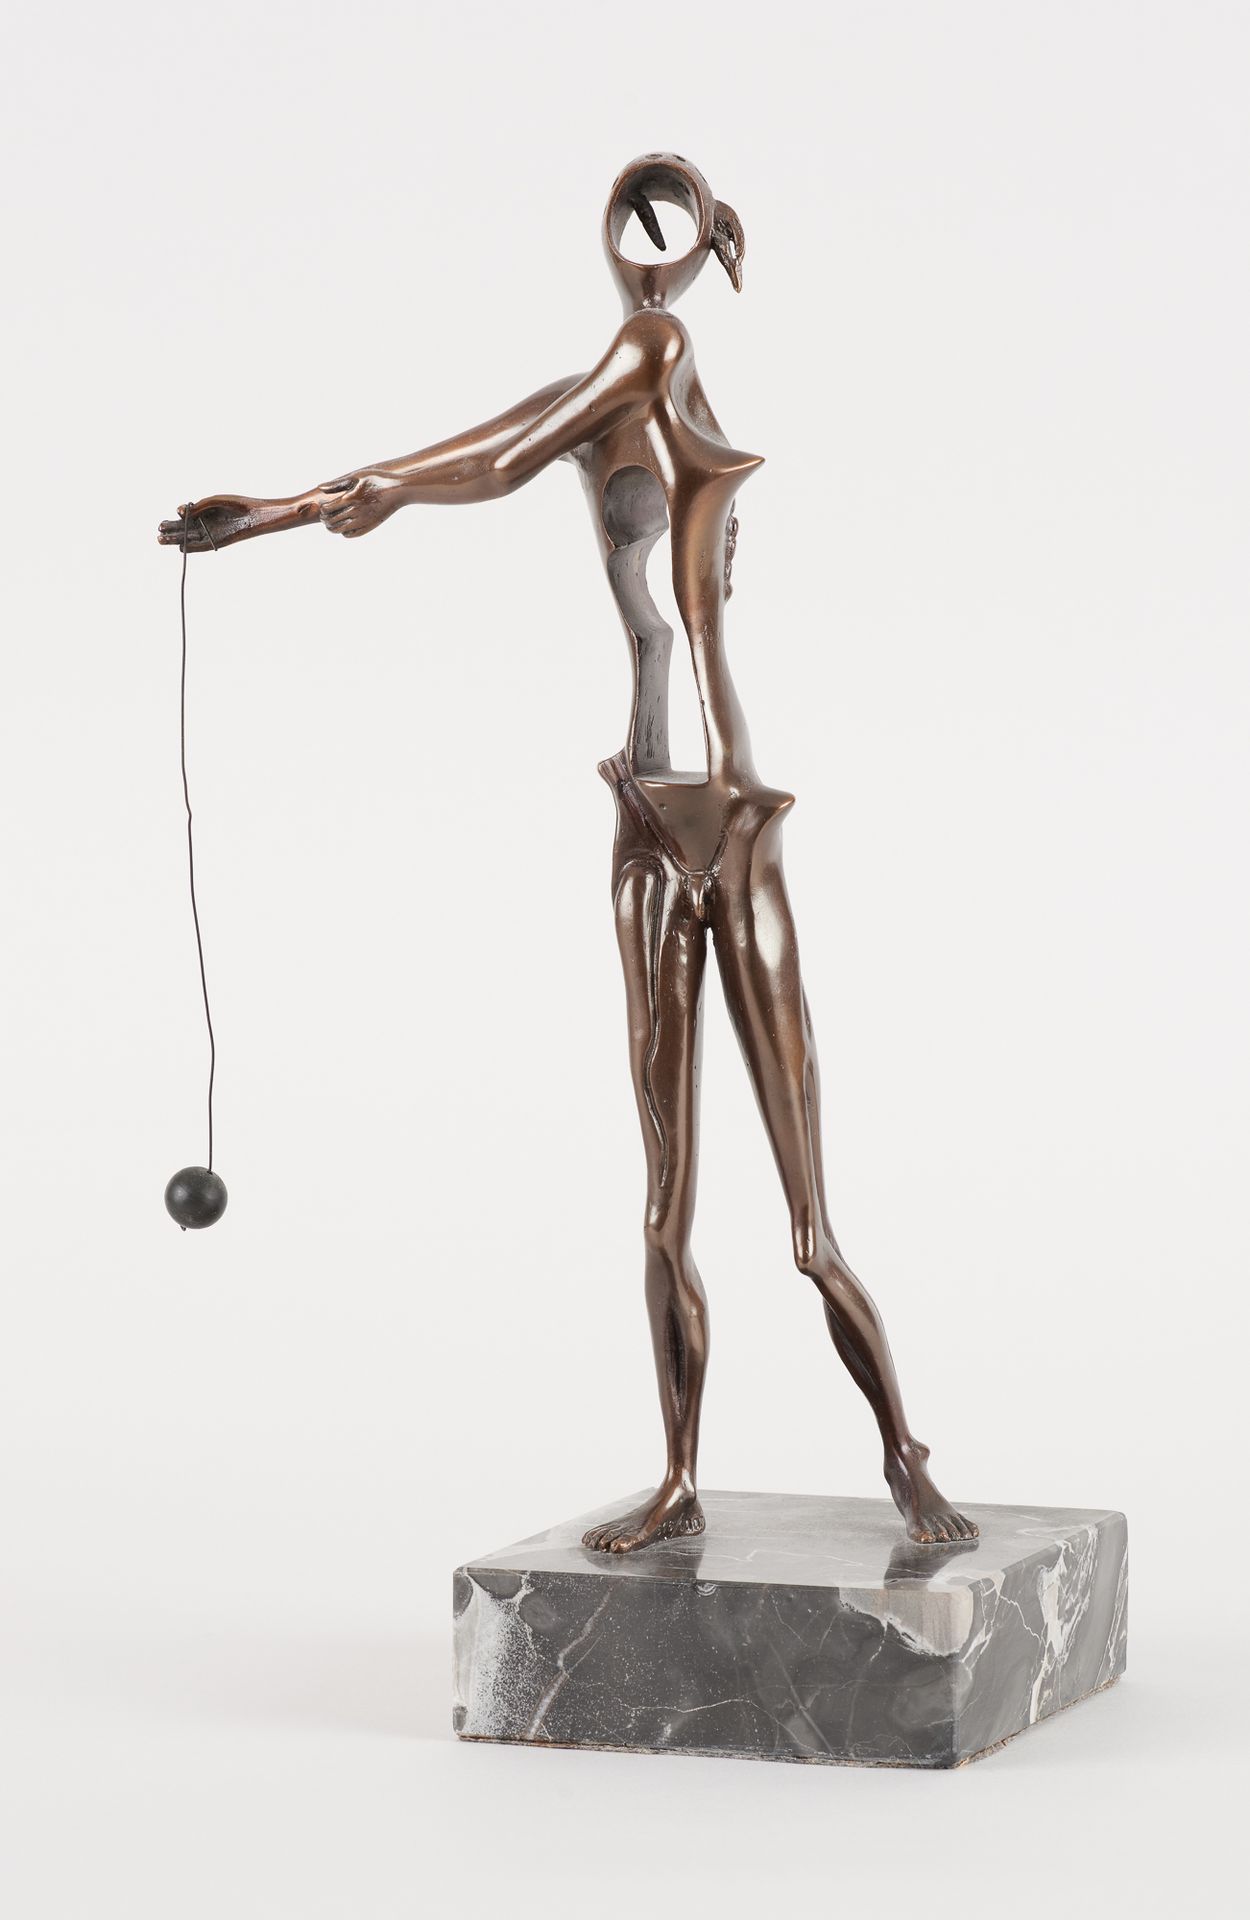 Salvador DALI École espagnole (1904-1989) 
带有棕色铜锈的青铜雕塑："向牛顿致敬"。

签名：达利，印刷品证明616/&hellip;